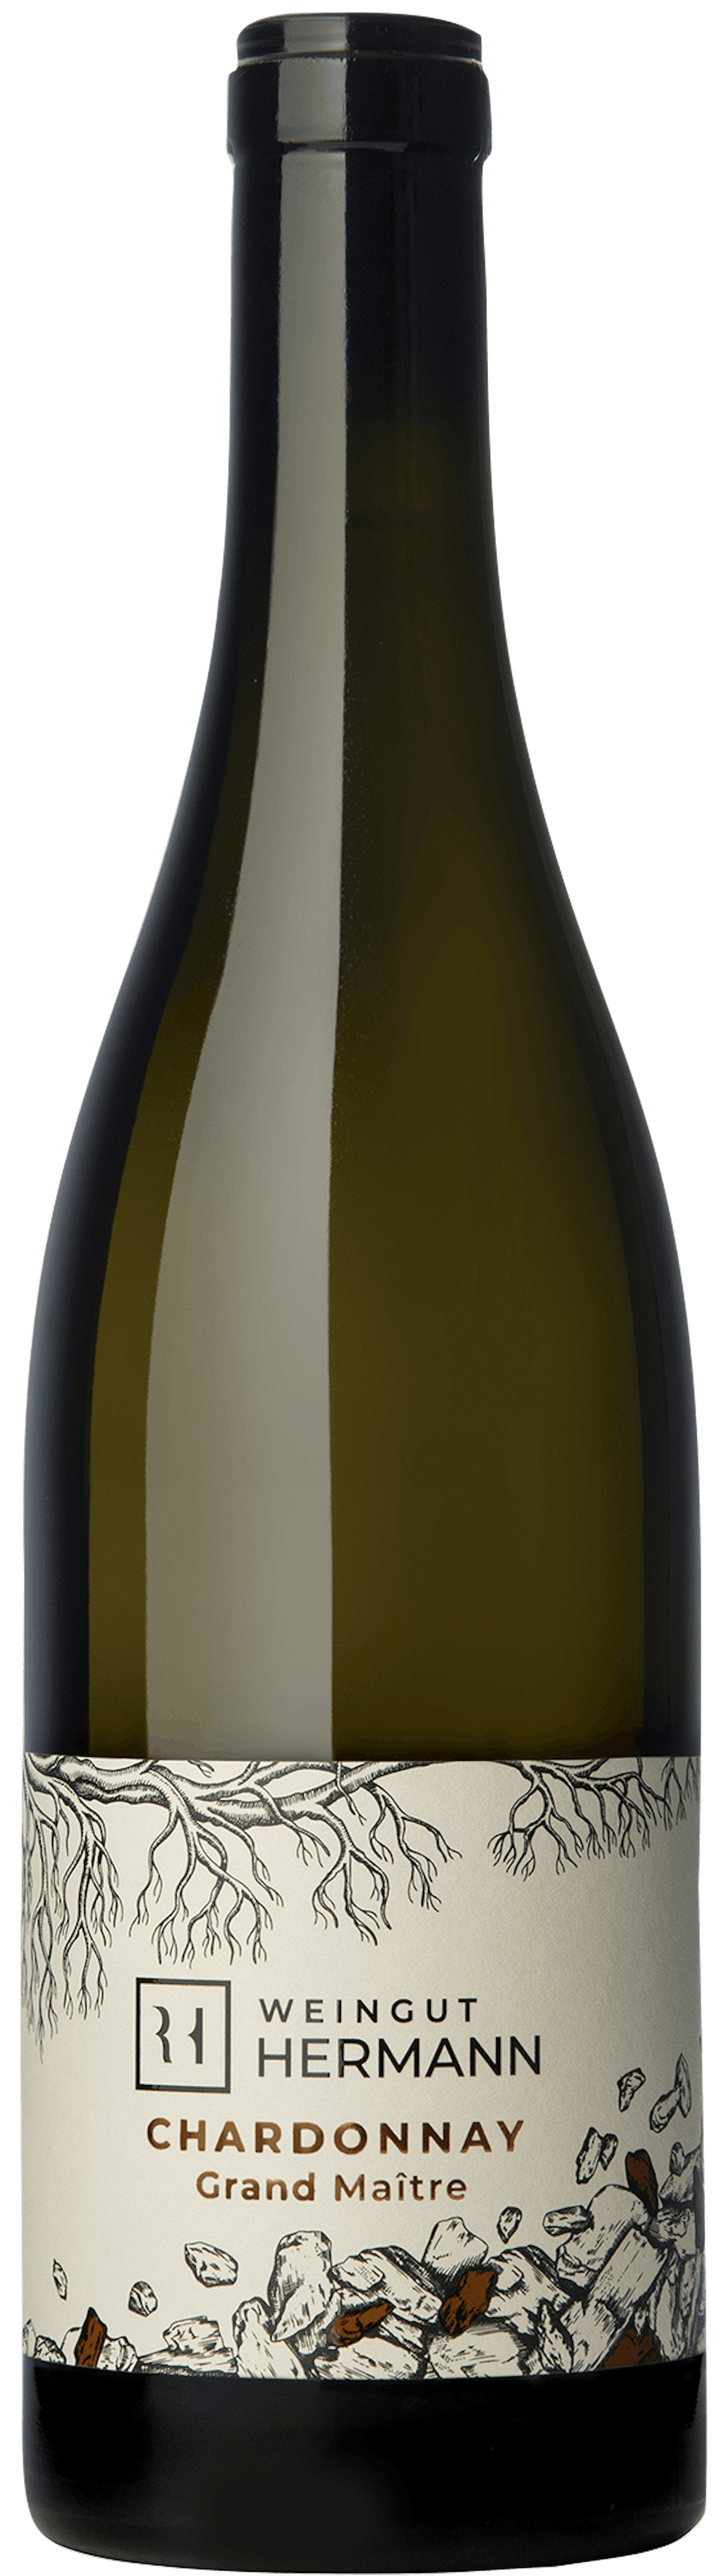 Grand Maître Chardonnay